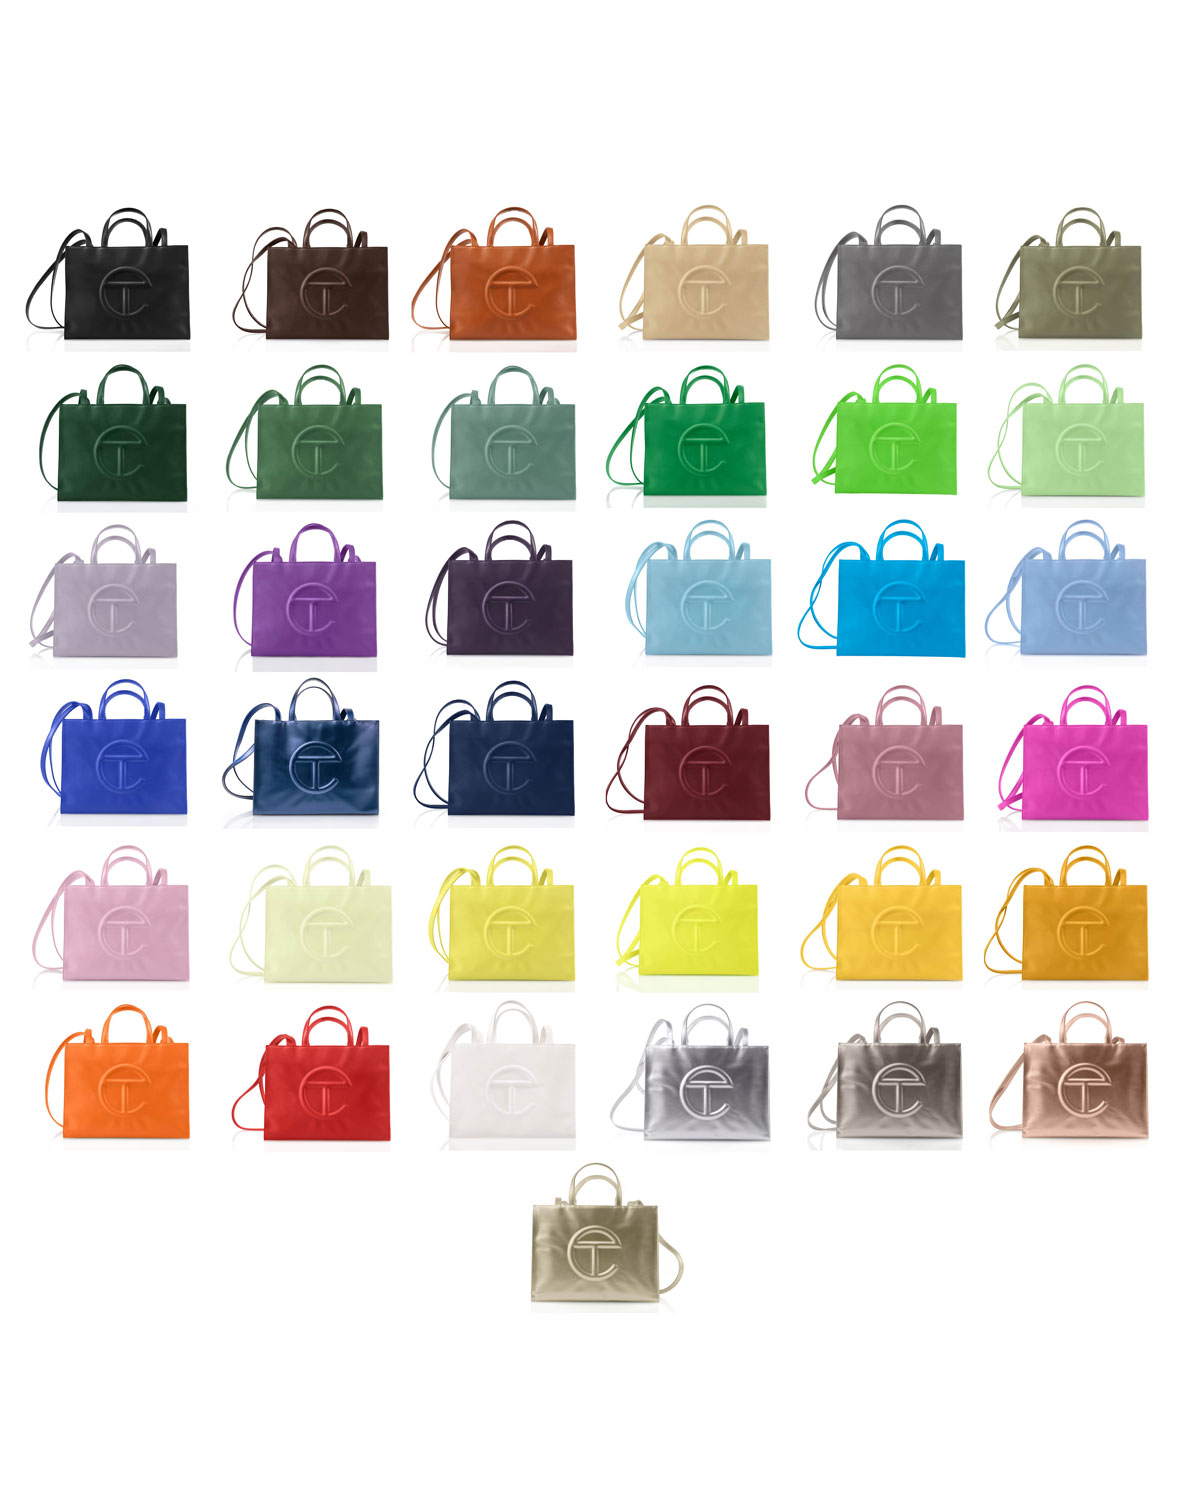 Telfar Rainbow Shopping Bag Drop: Release Date, Price, Time